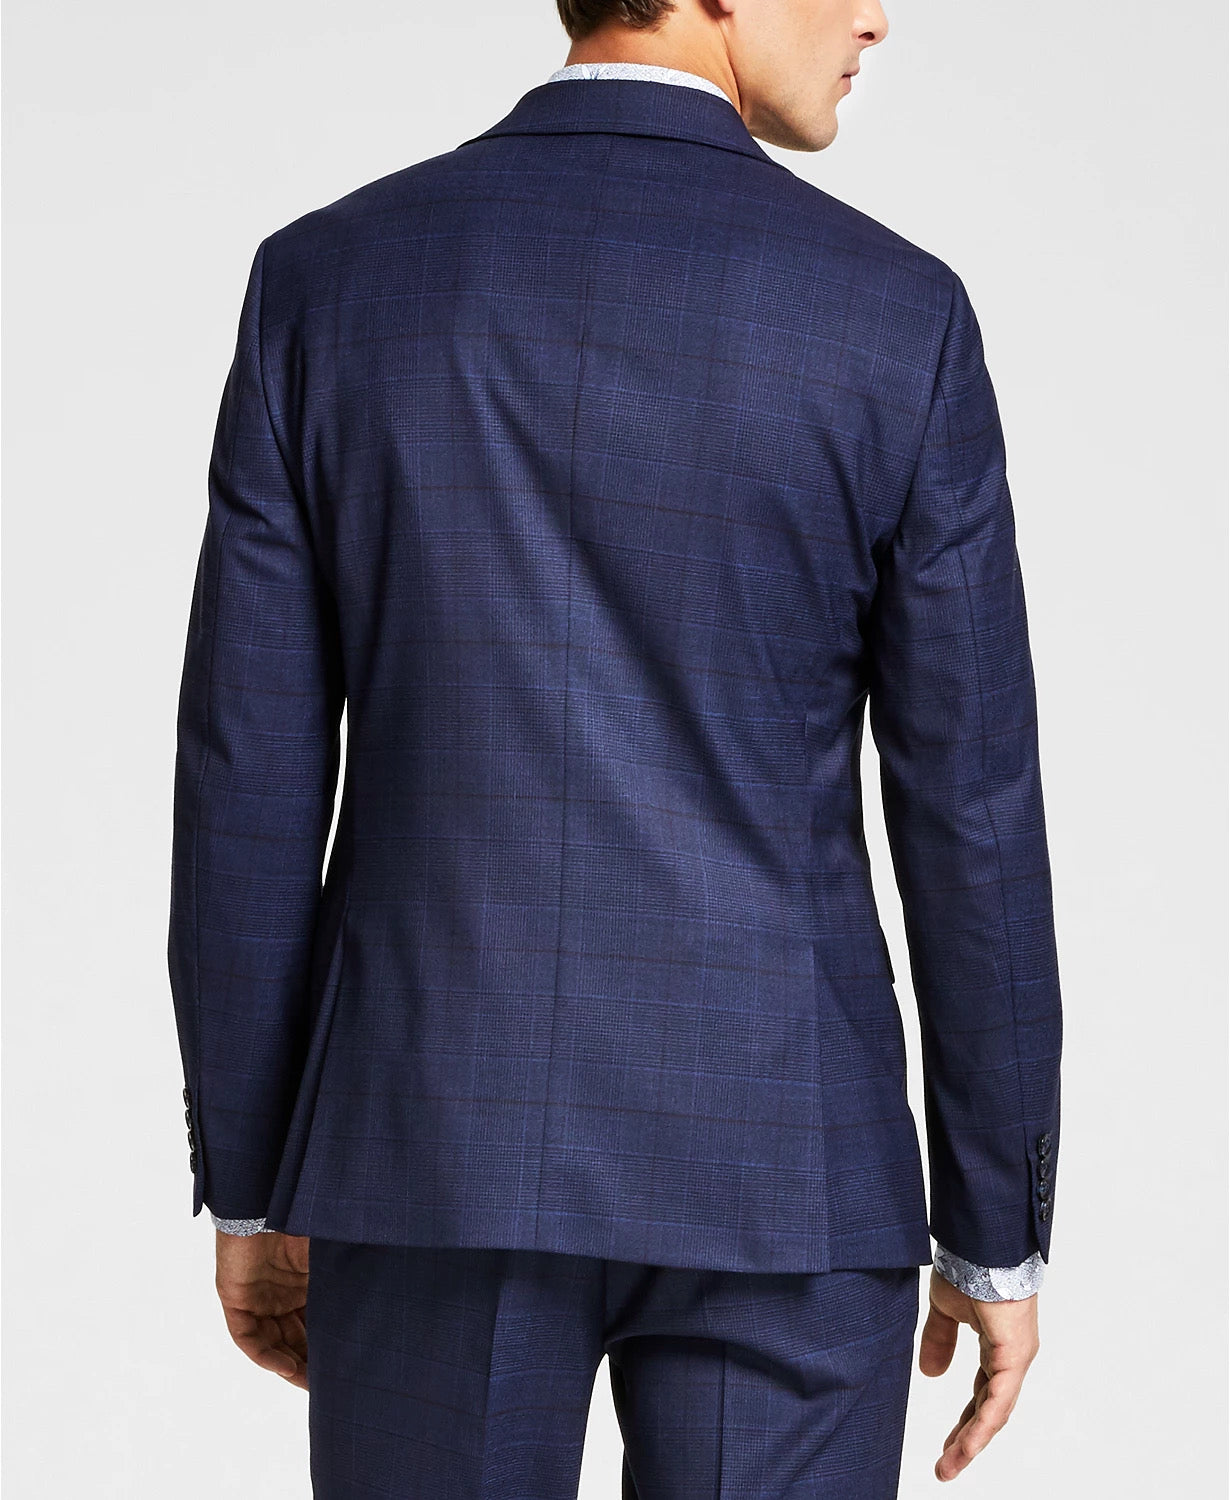 Bar III Men's Skinny Fit Navy Blue Plaid Suit Jacket 40S Sport Coat